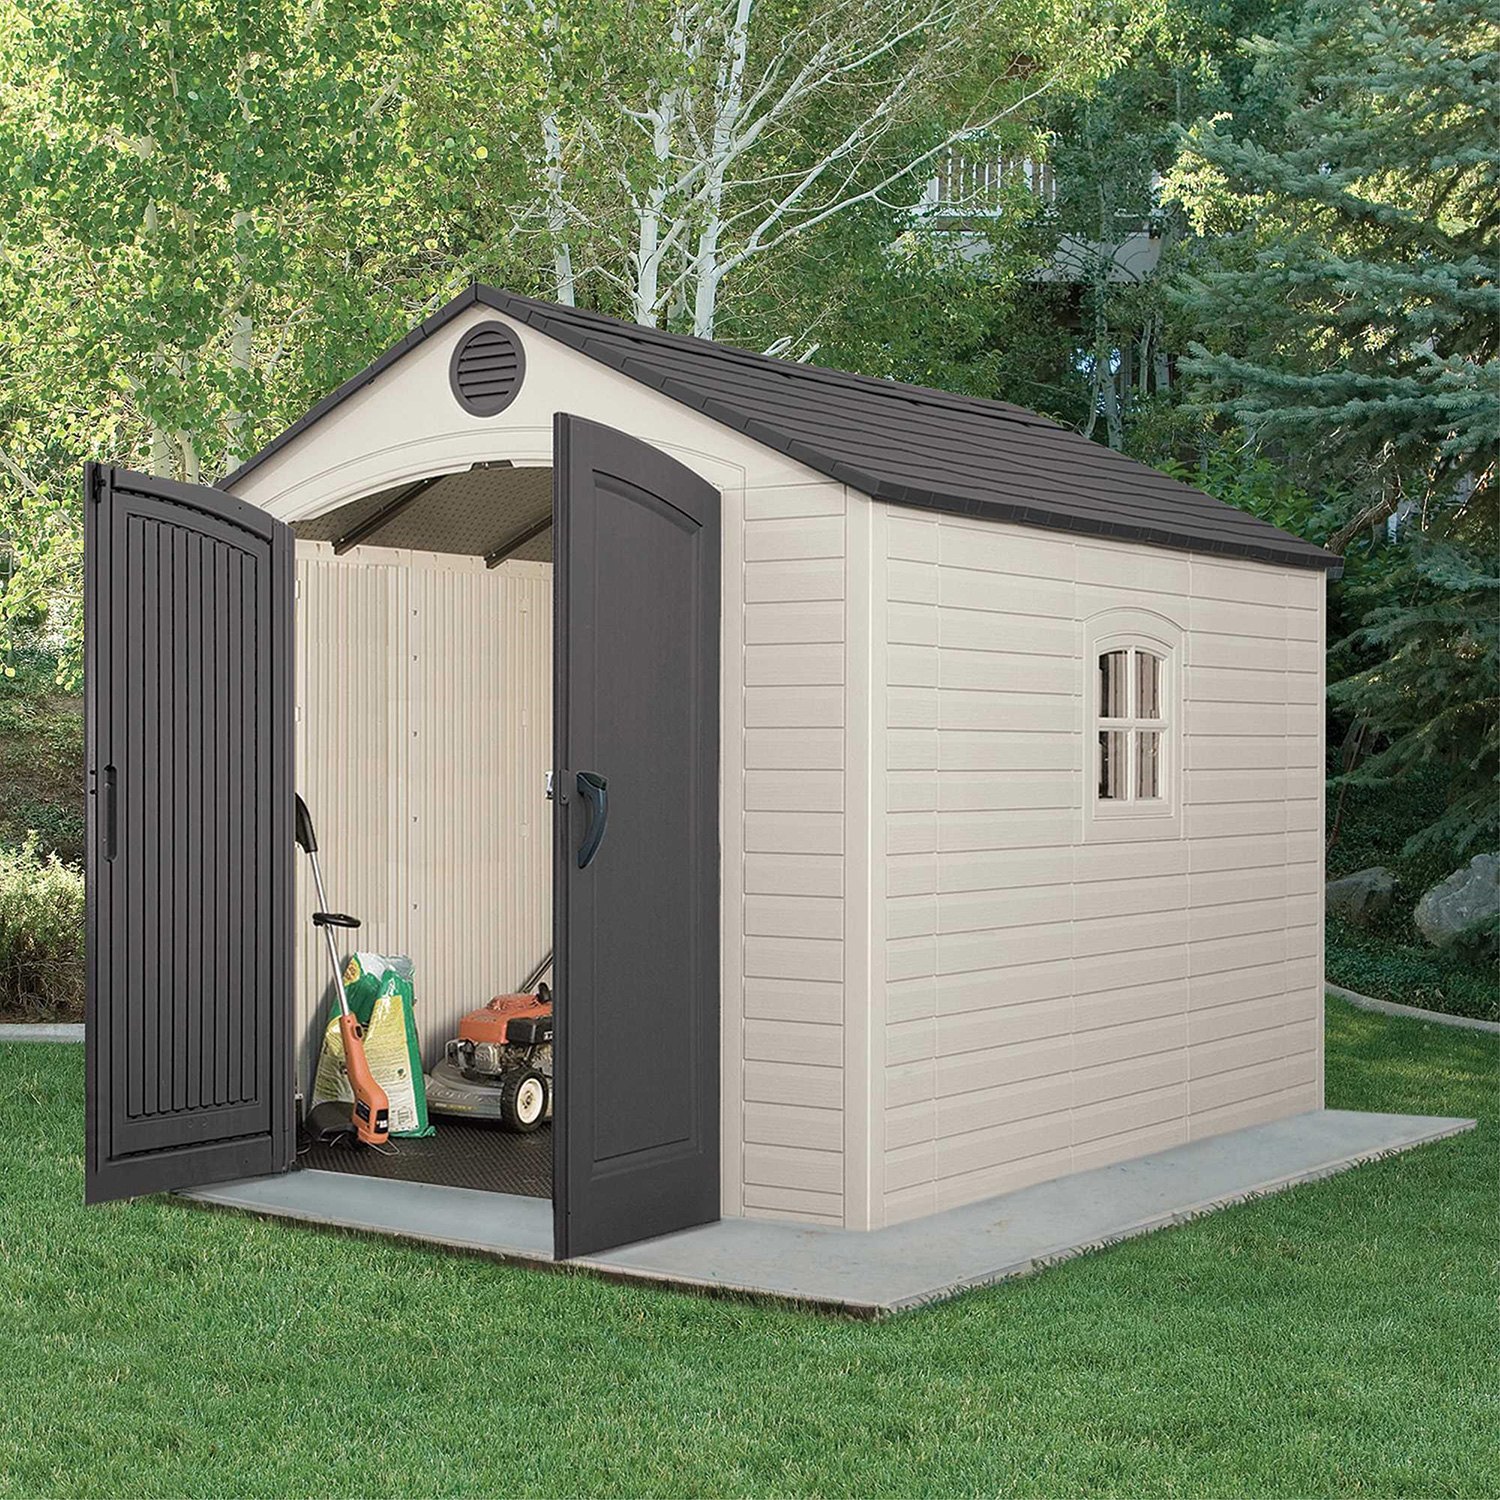 Easy shed base : Best image Lifetime outdoor storage shed